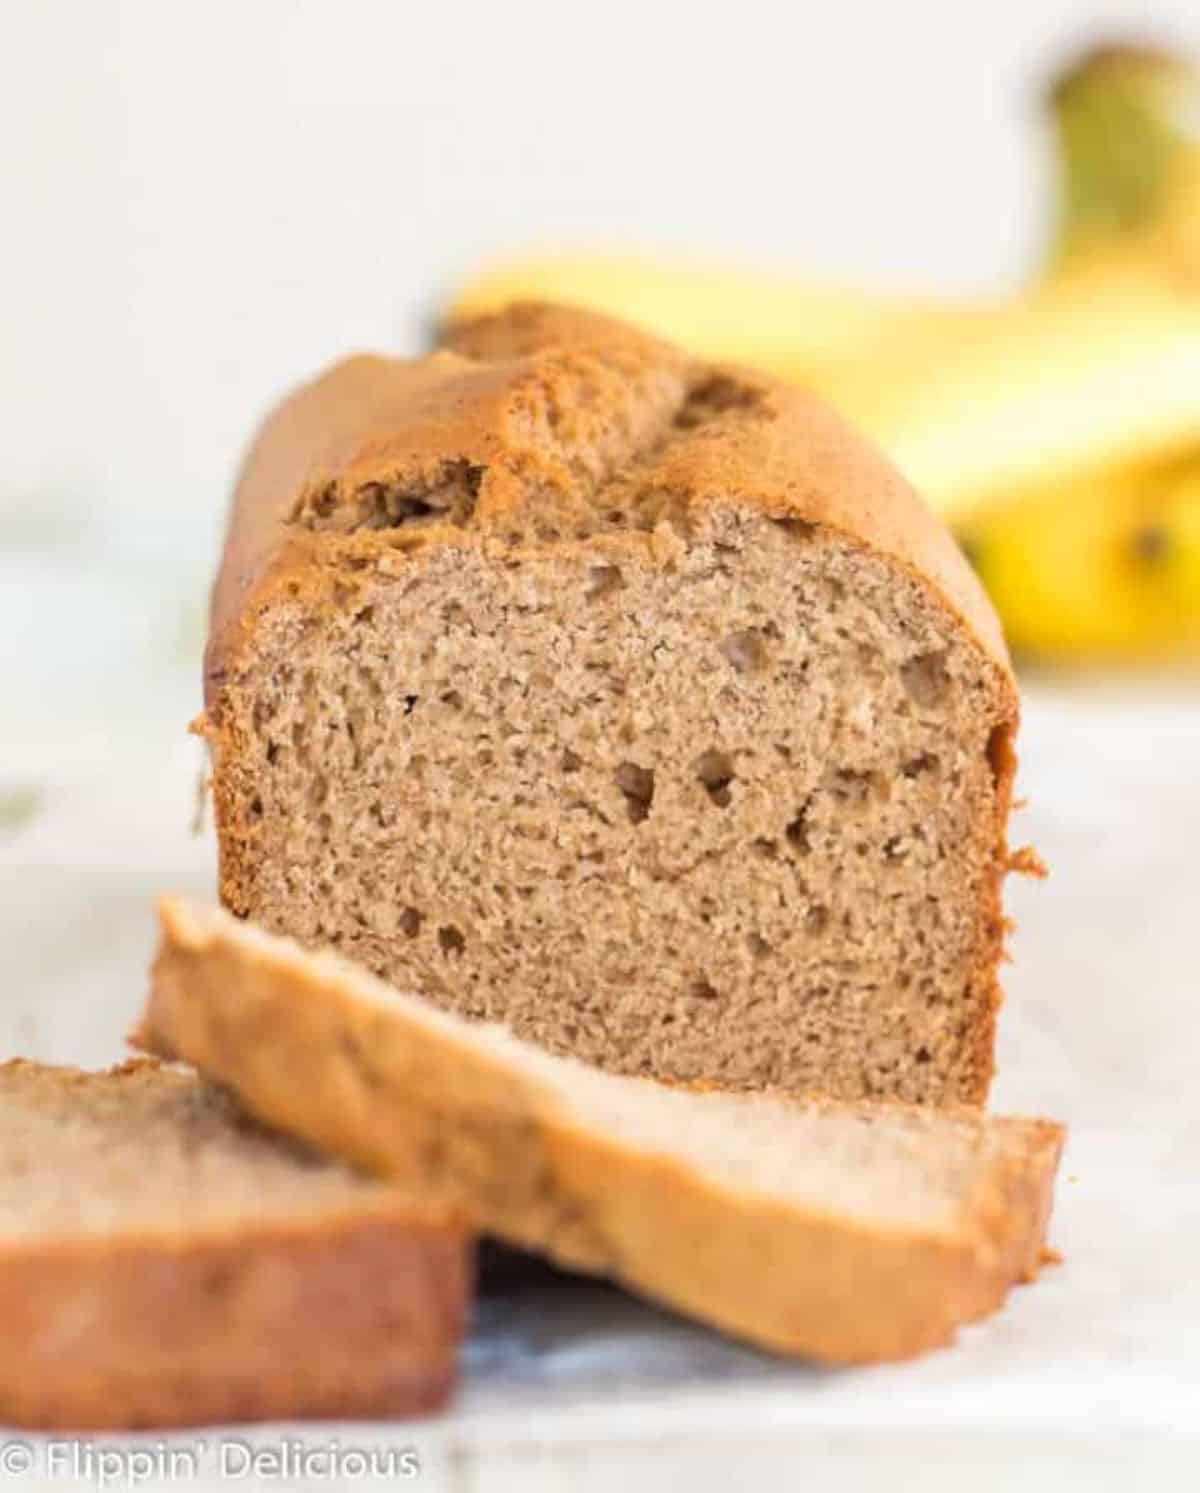 Gluten-Free Banana Bread